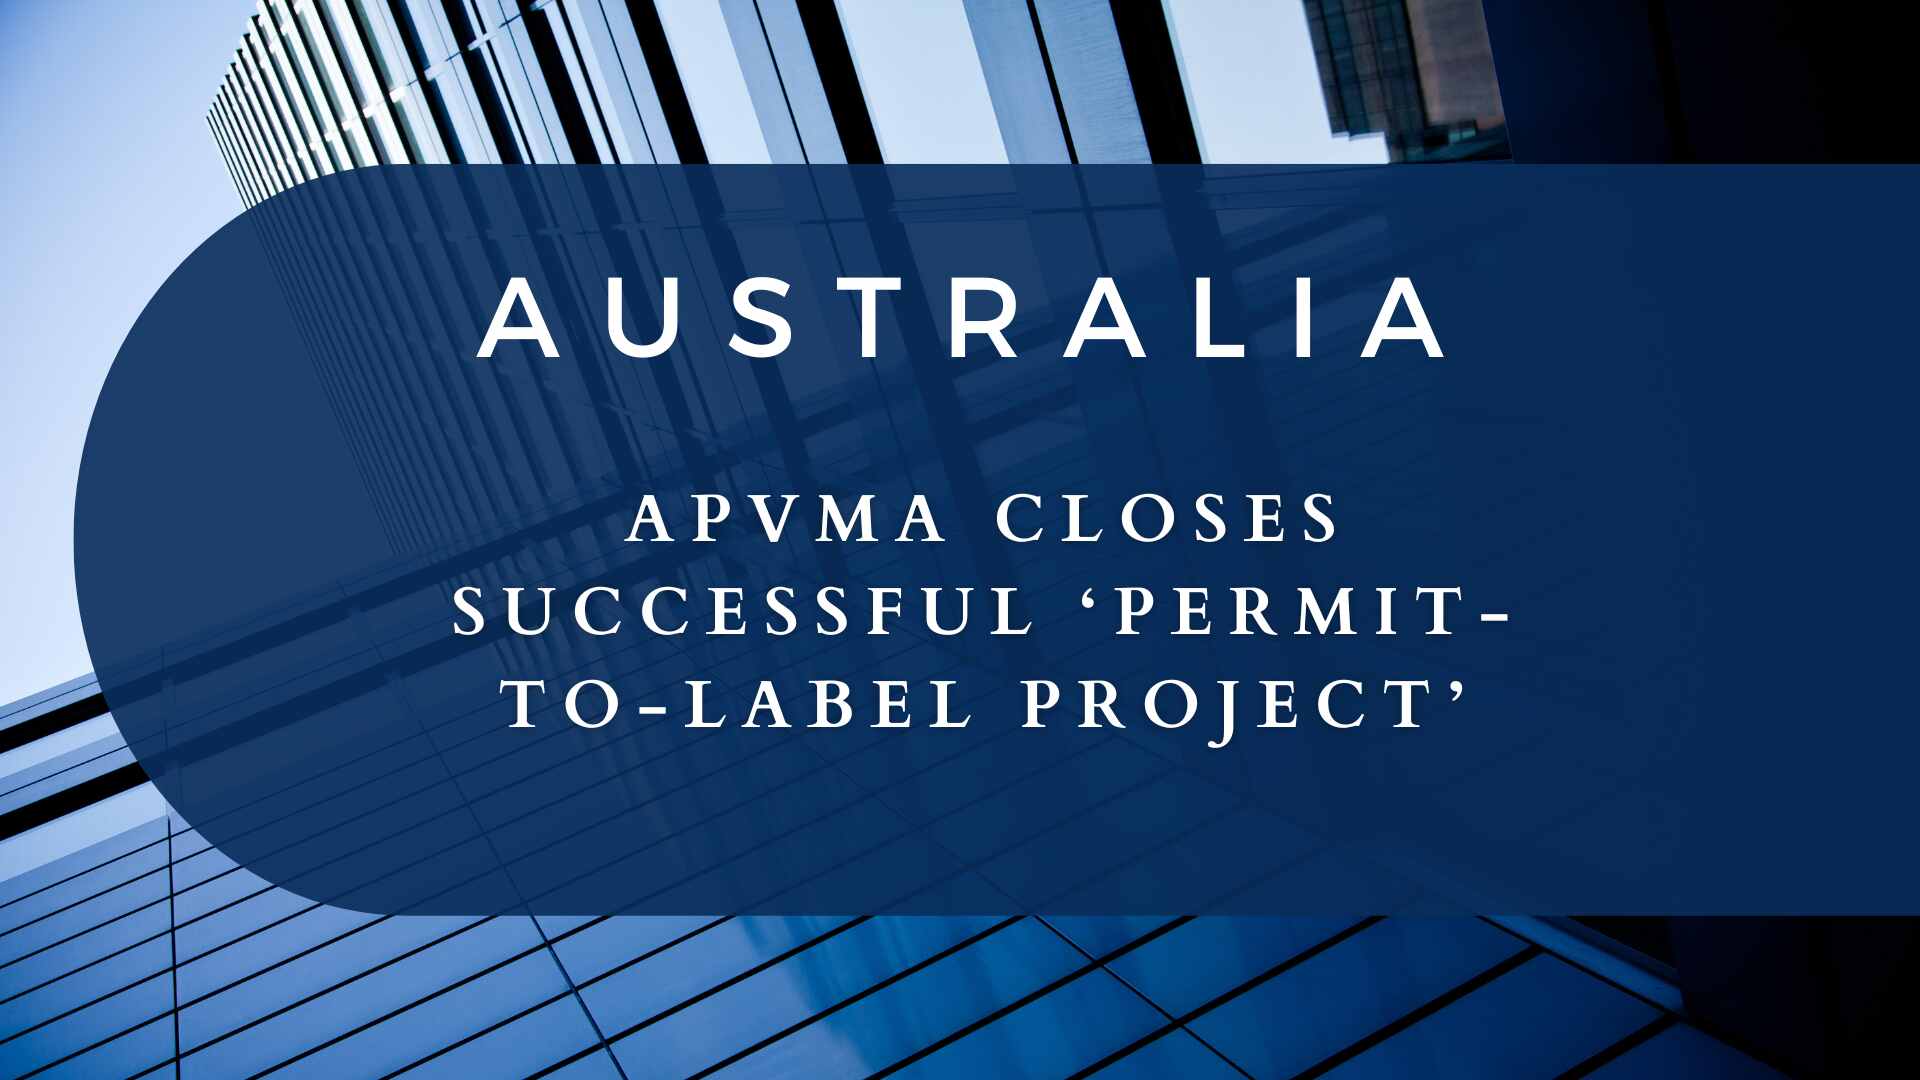 APVMA closes successful ‘permit-to-label project’, aims to streamline process for future!